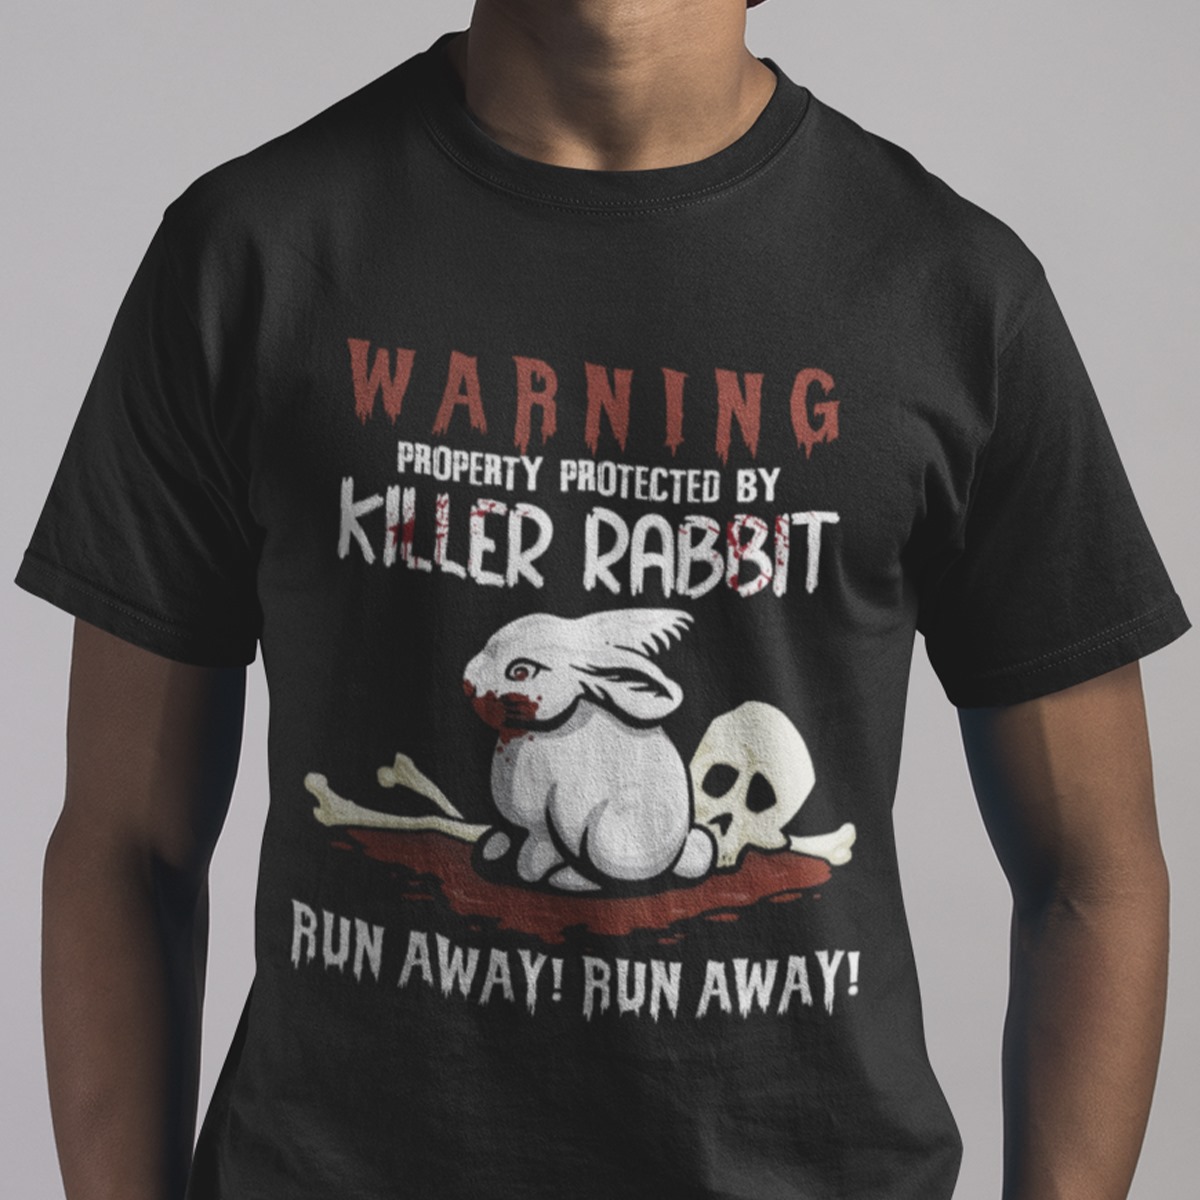 Warning property protected by Killer rabbit run away run away